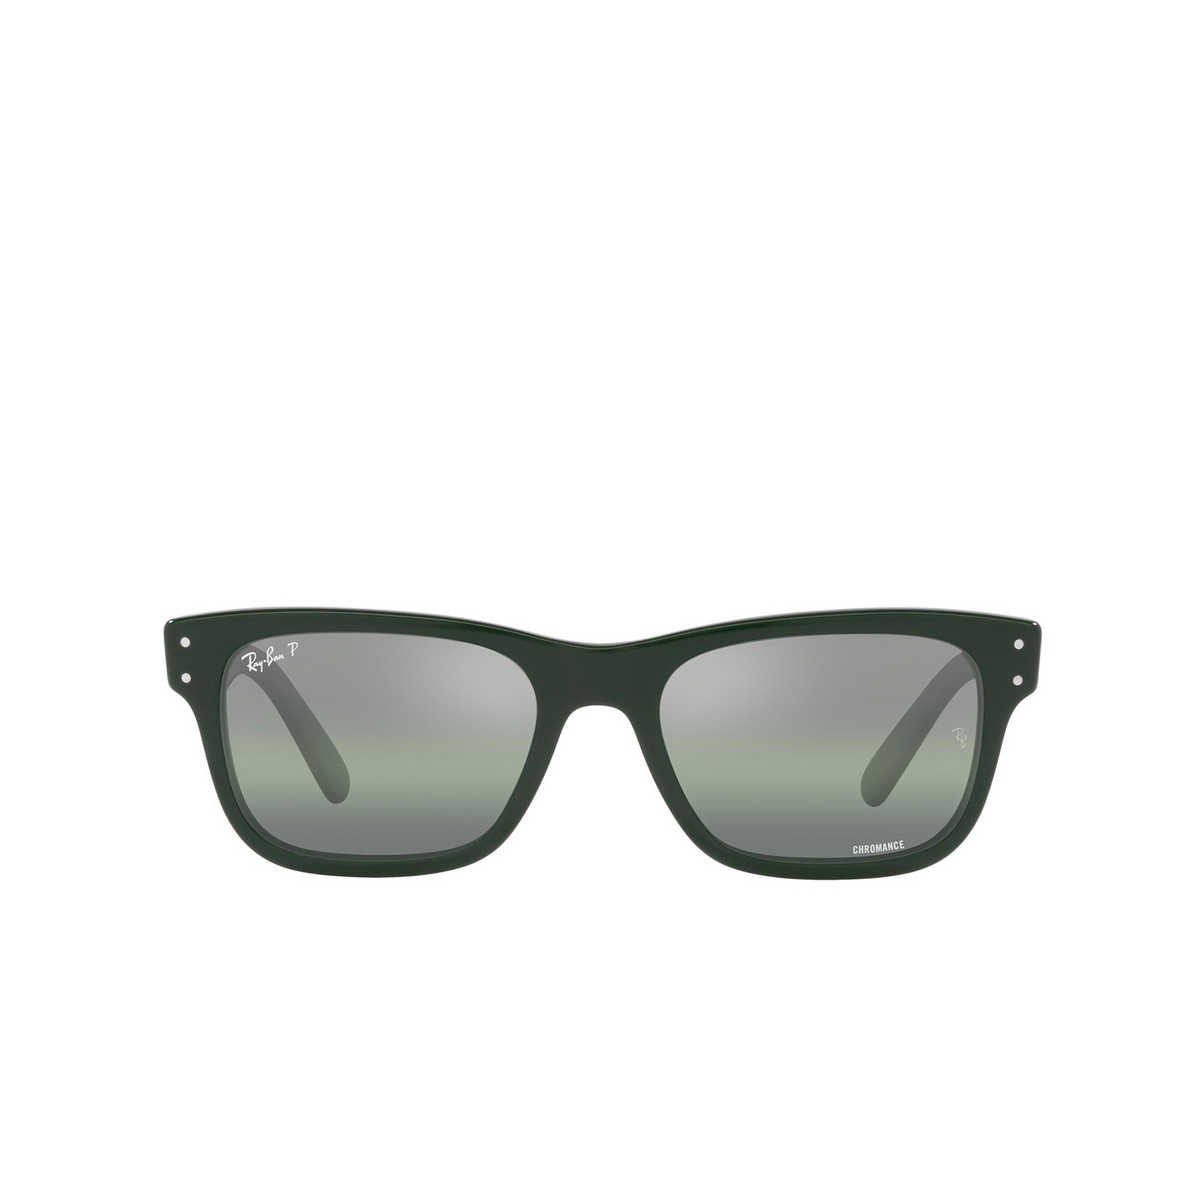 Ray-Ban MR BURBANK Sunglasses 6659G4 Green - front view